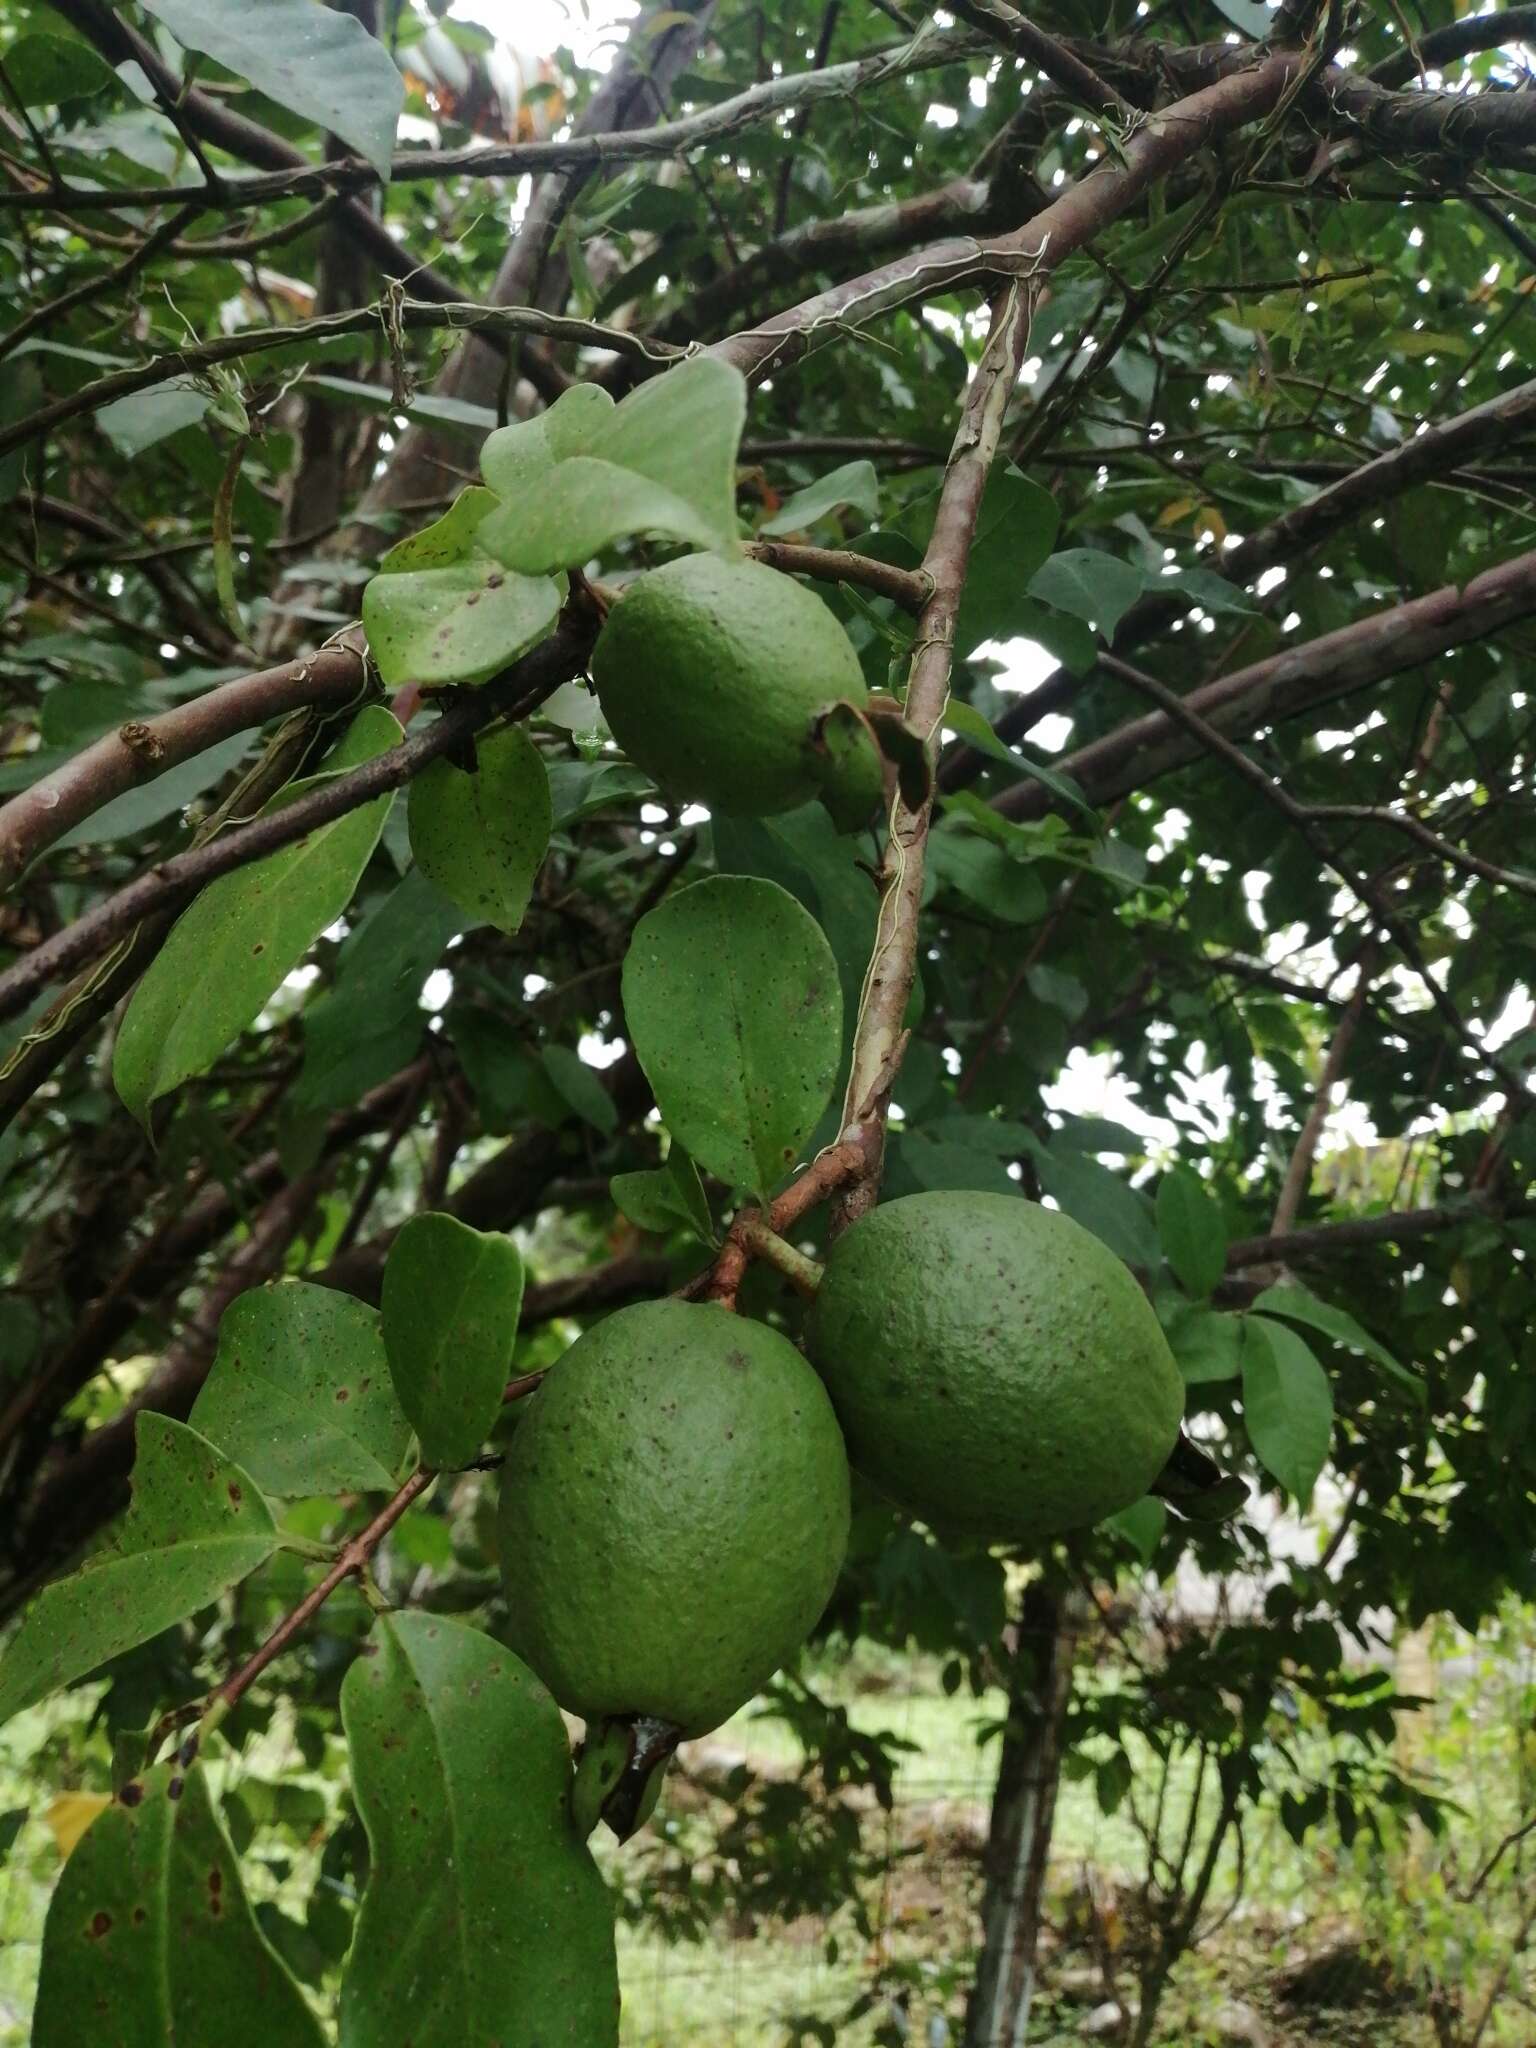 Image of wild guava